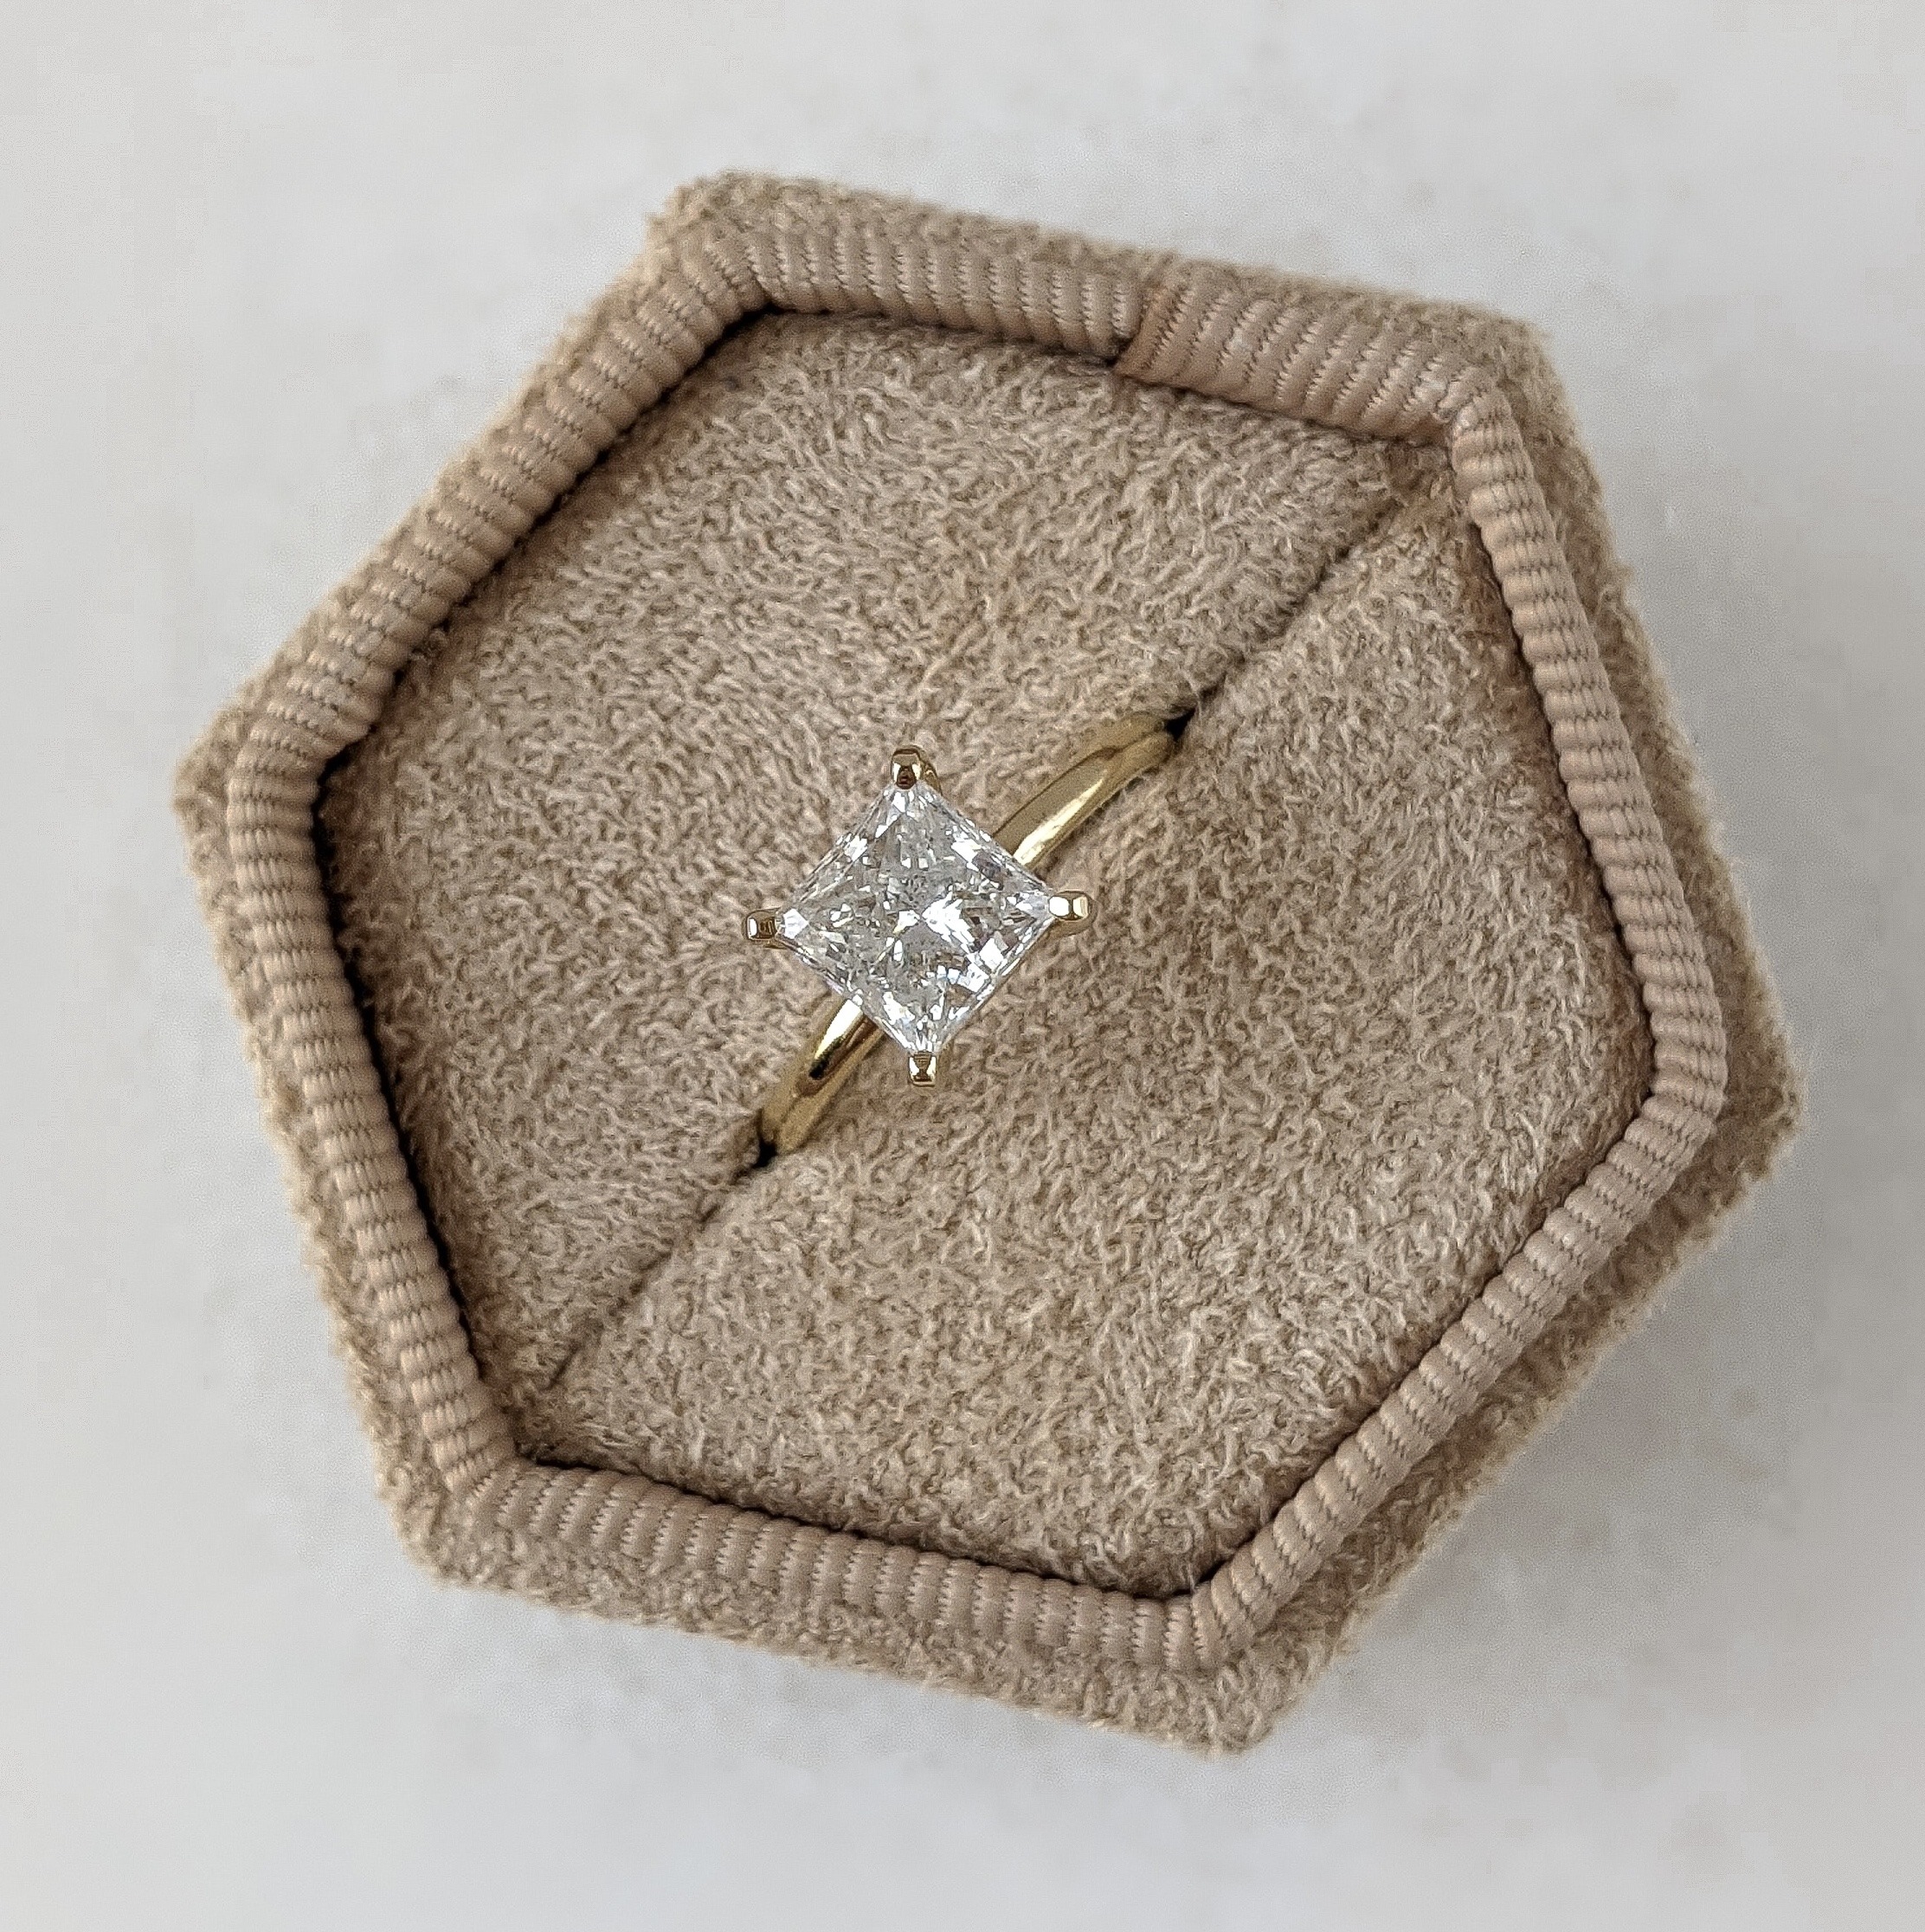 Aria ring - Diamond Engagement Ring, 1.5 Carat Princess, 14K White Gold Solitaire Ring